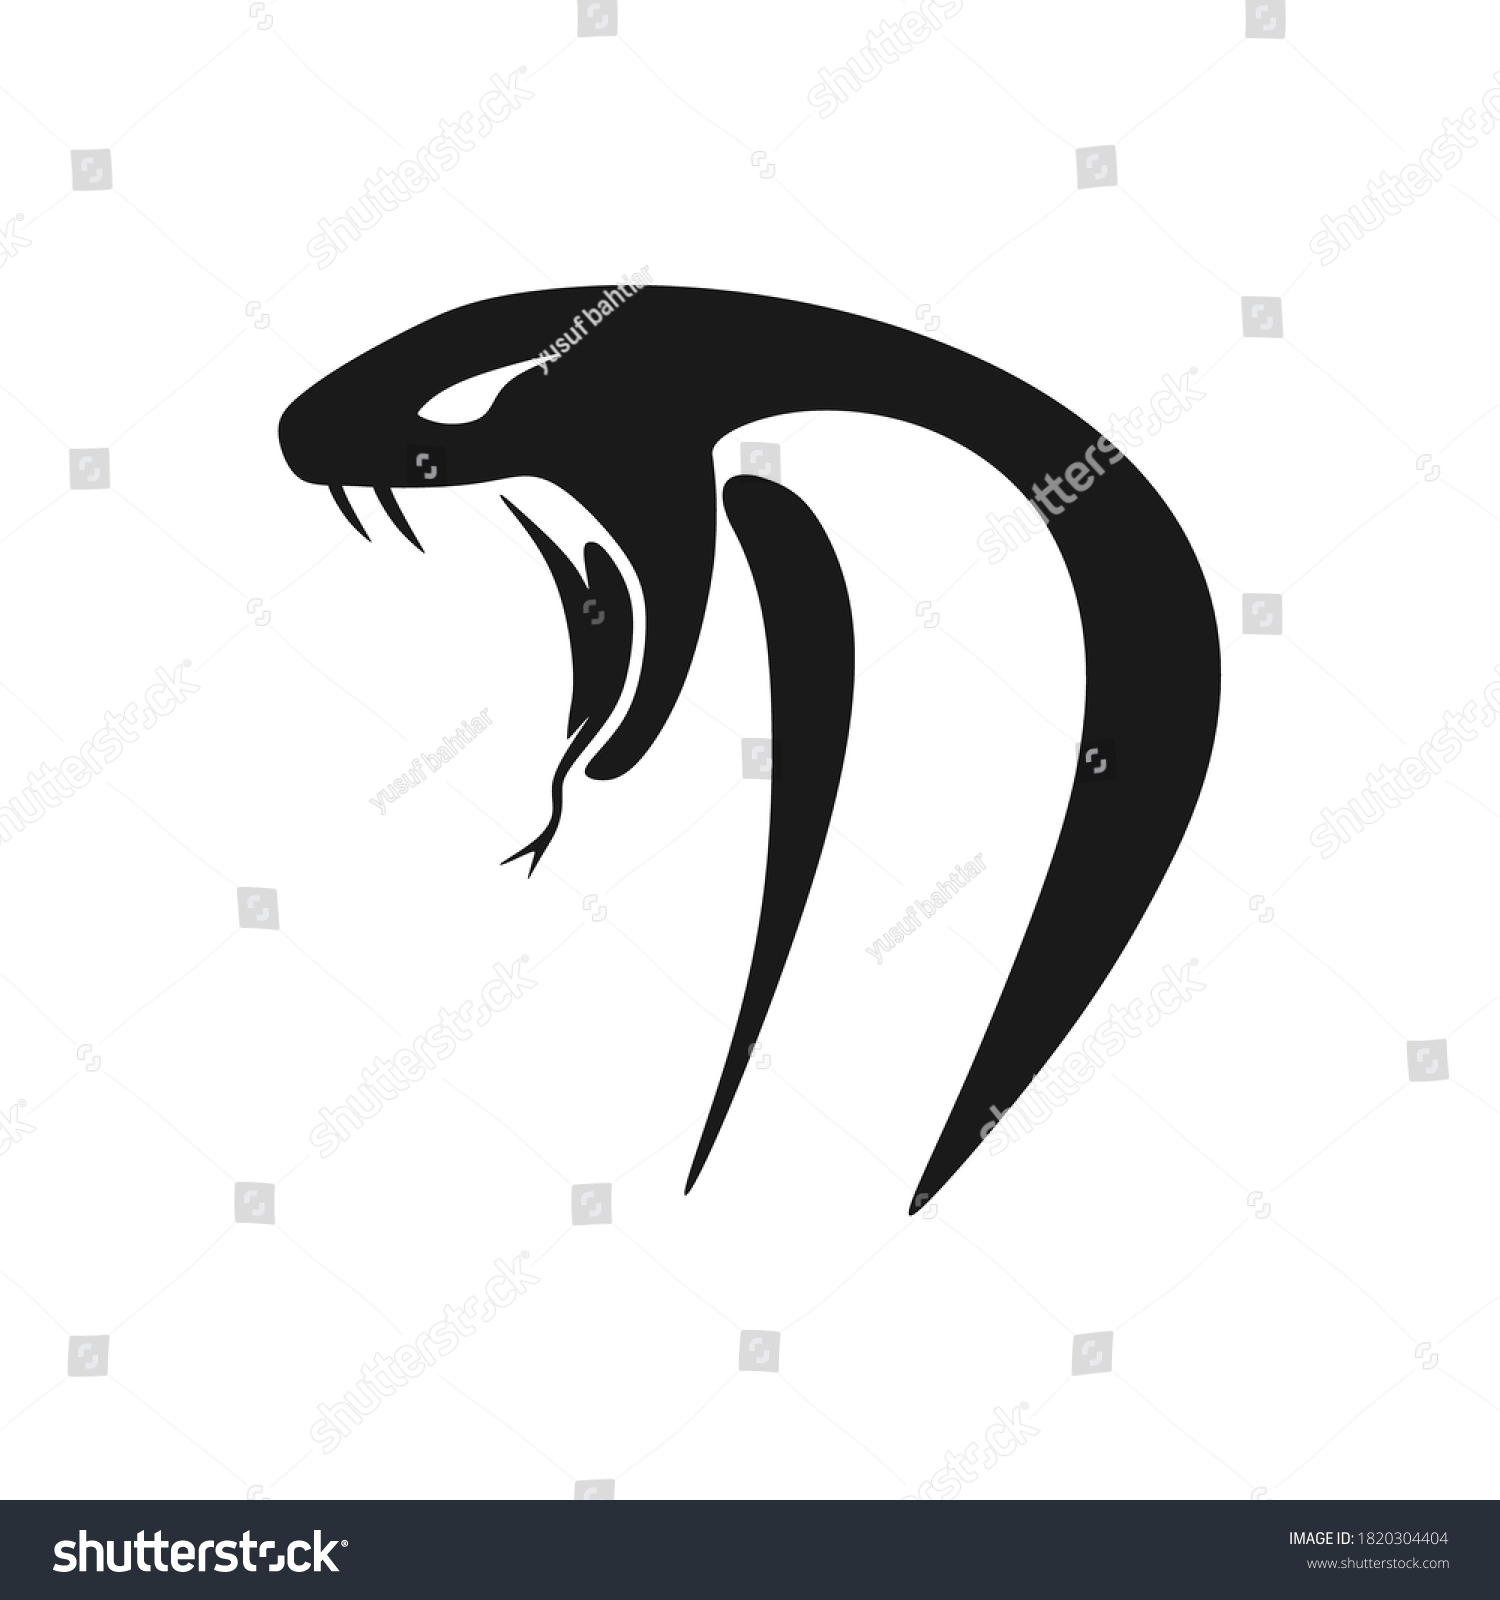 SVG of illustration vector graphic of cobra logo or icon svg